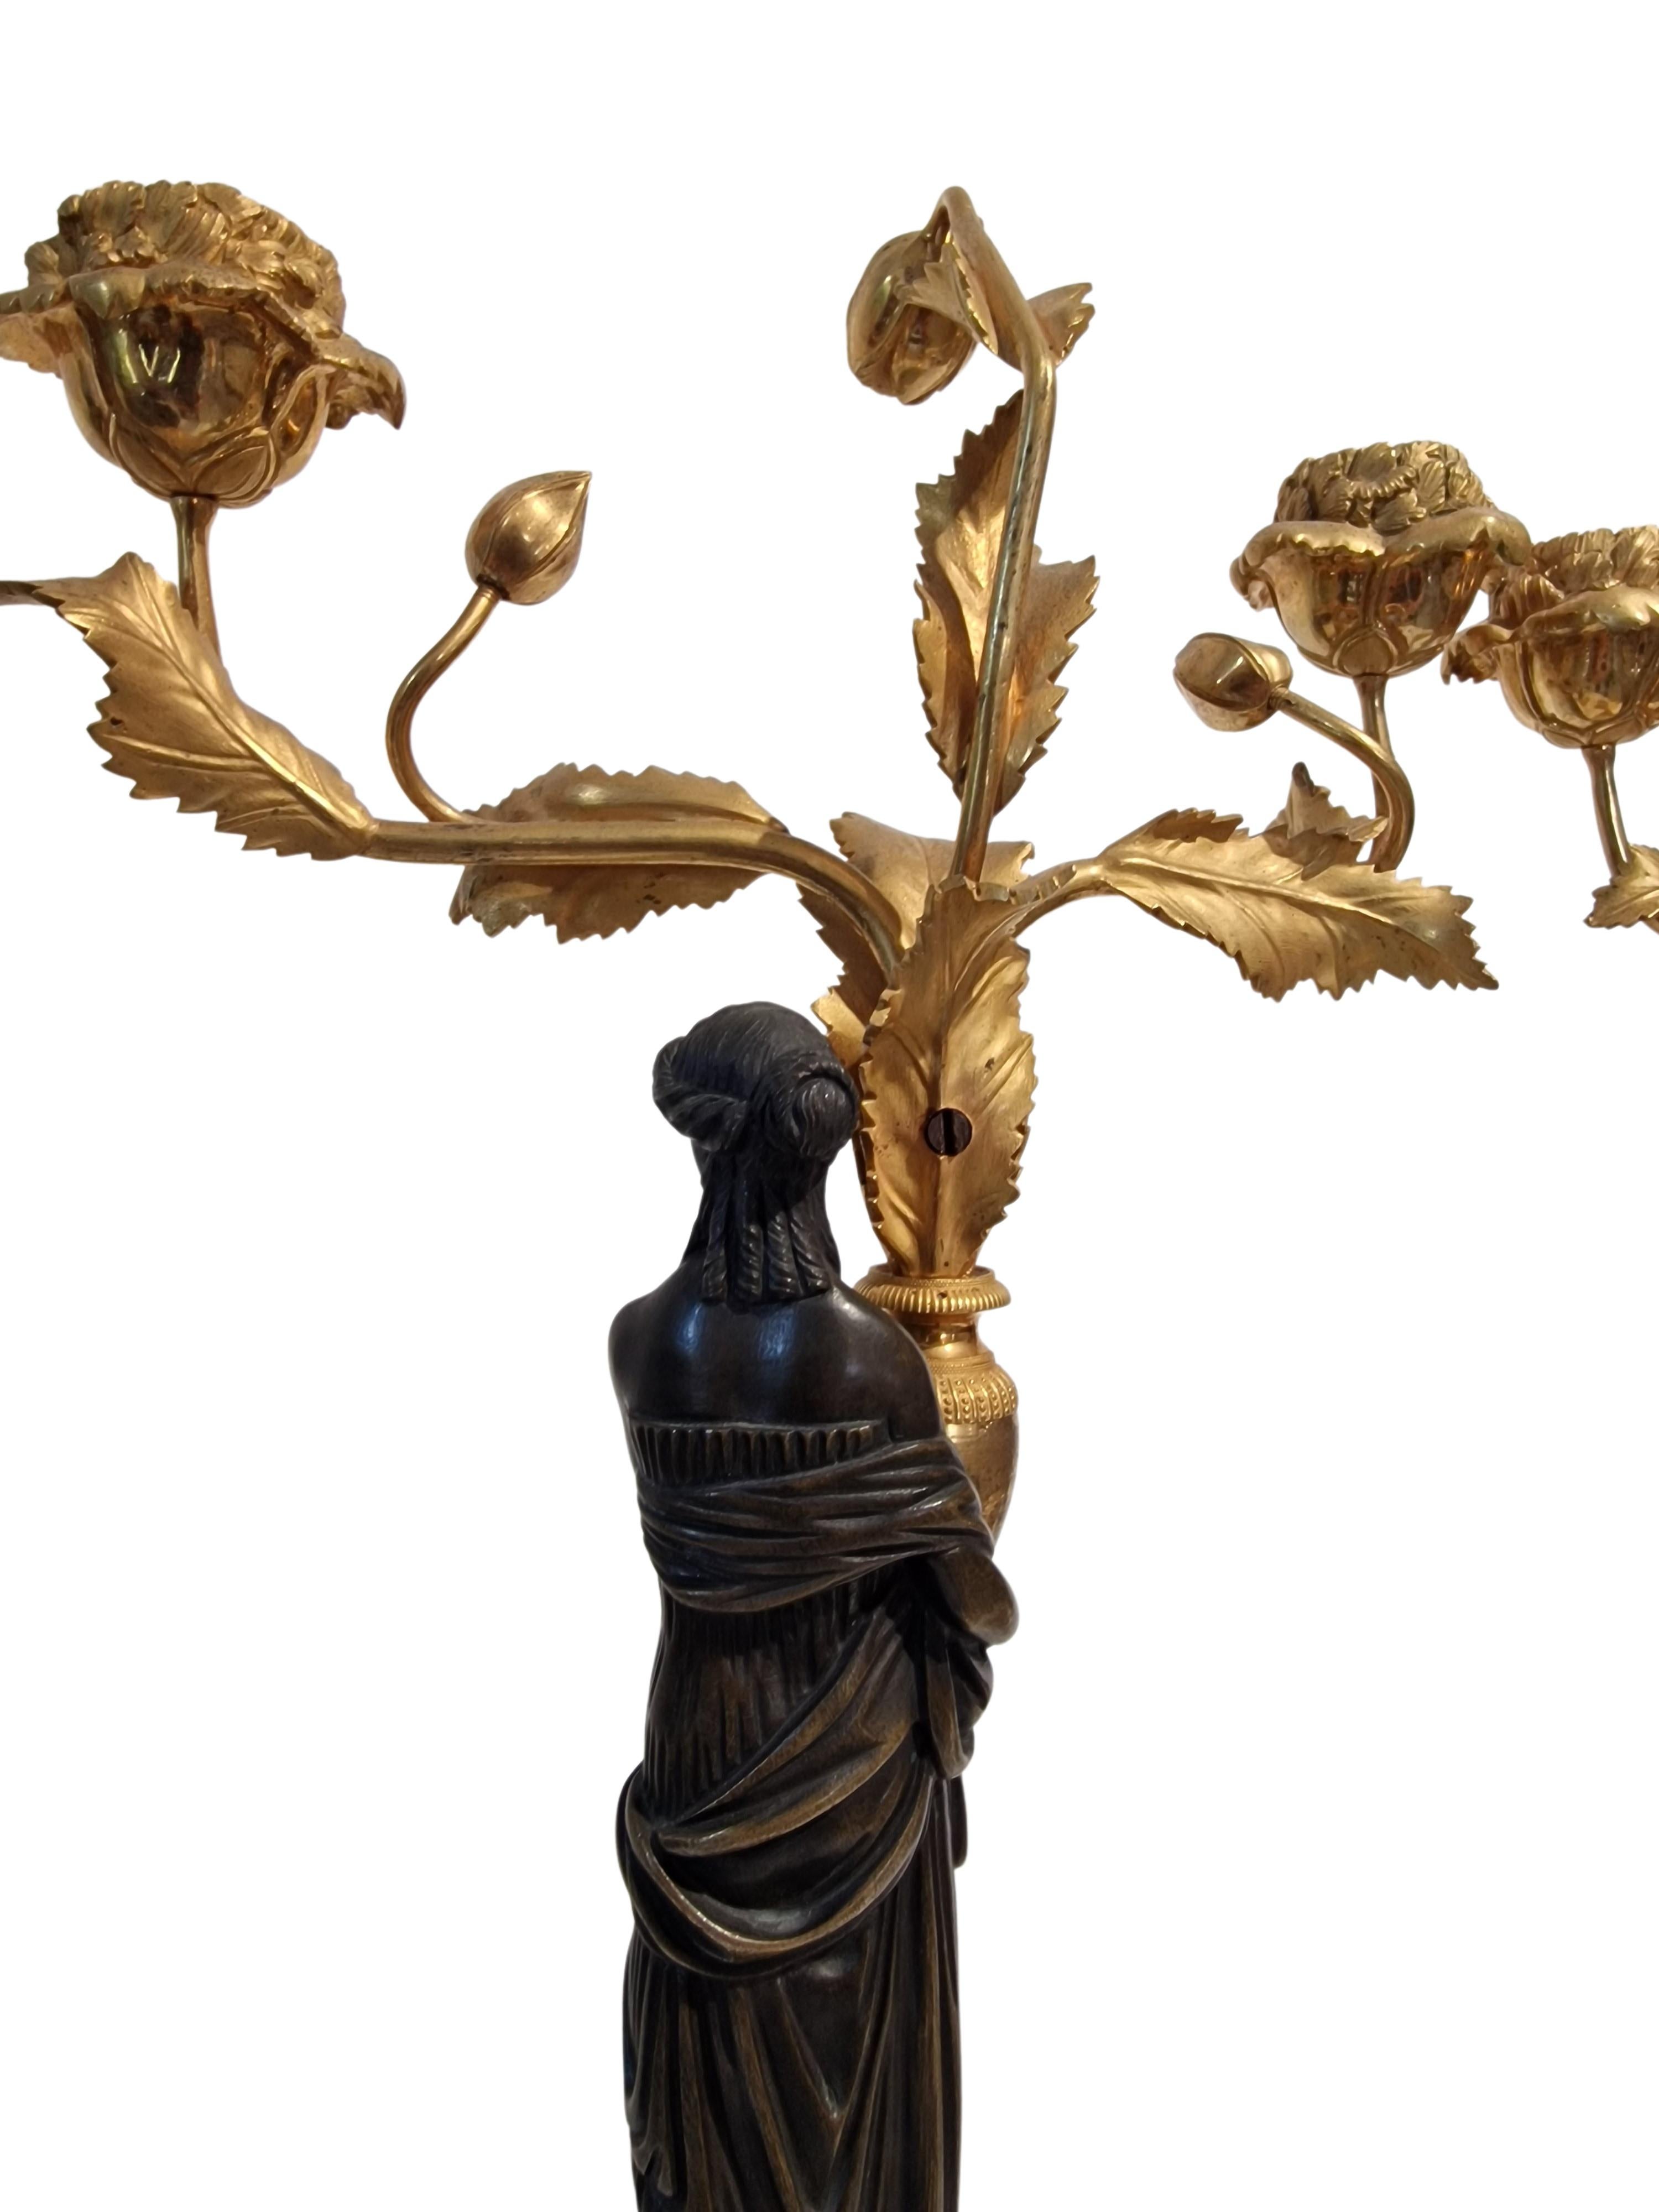 Pair of Girandoles, Candle sticks, Candelabras, bronze, ~ 1810 Empire, France For Sale 2